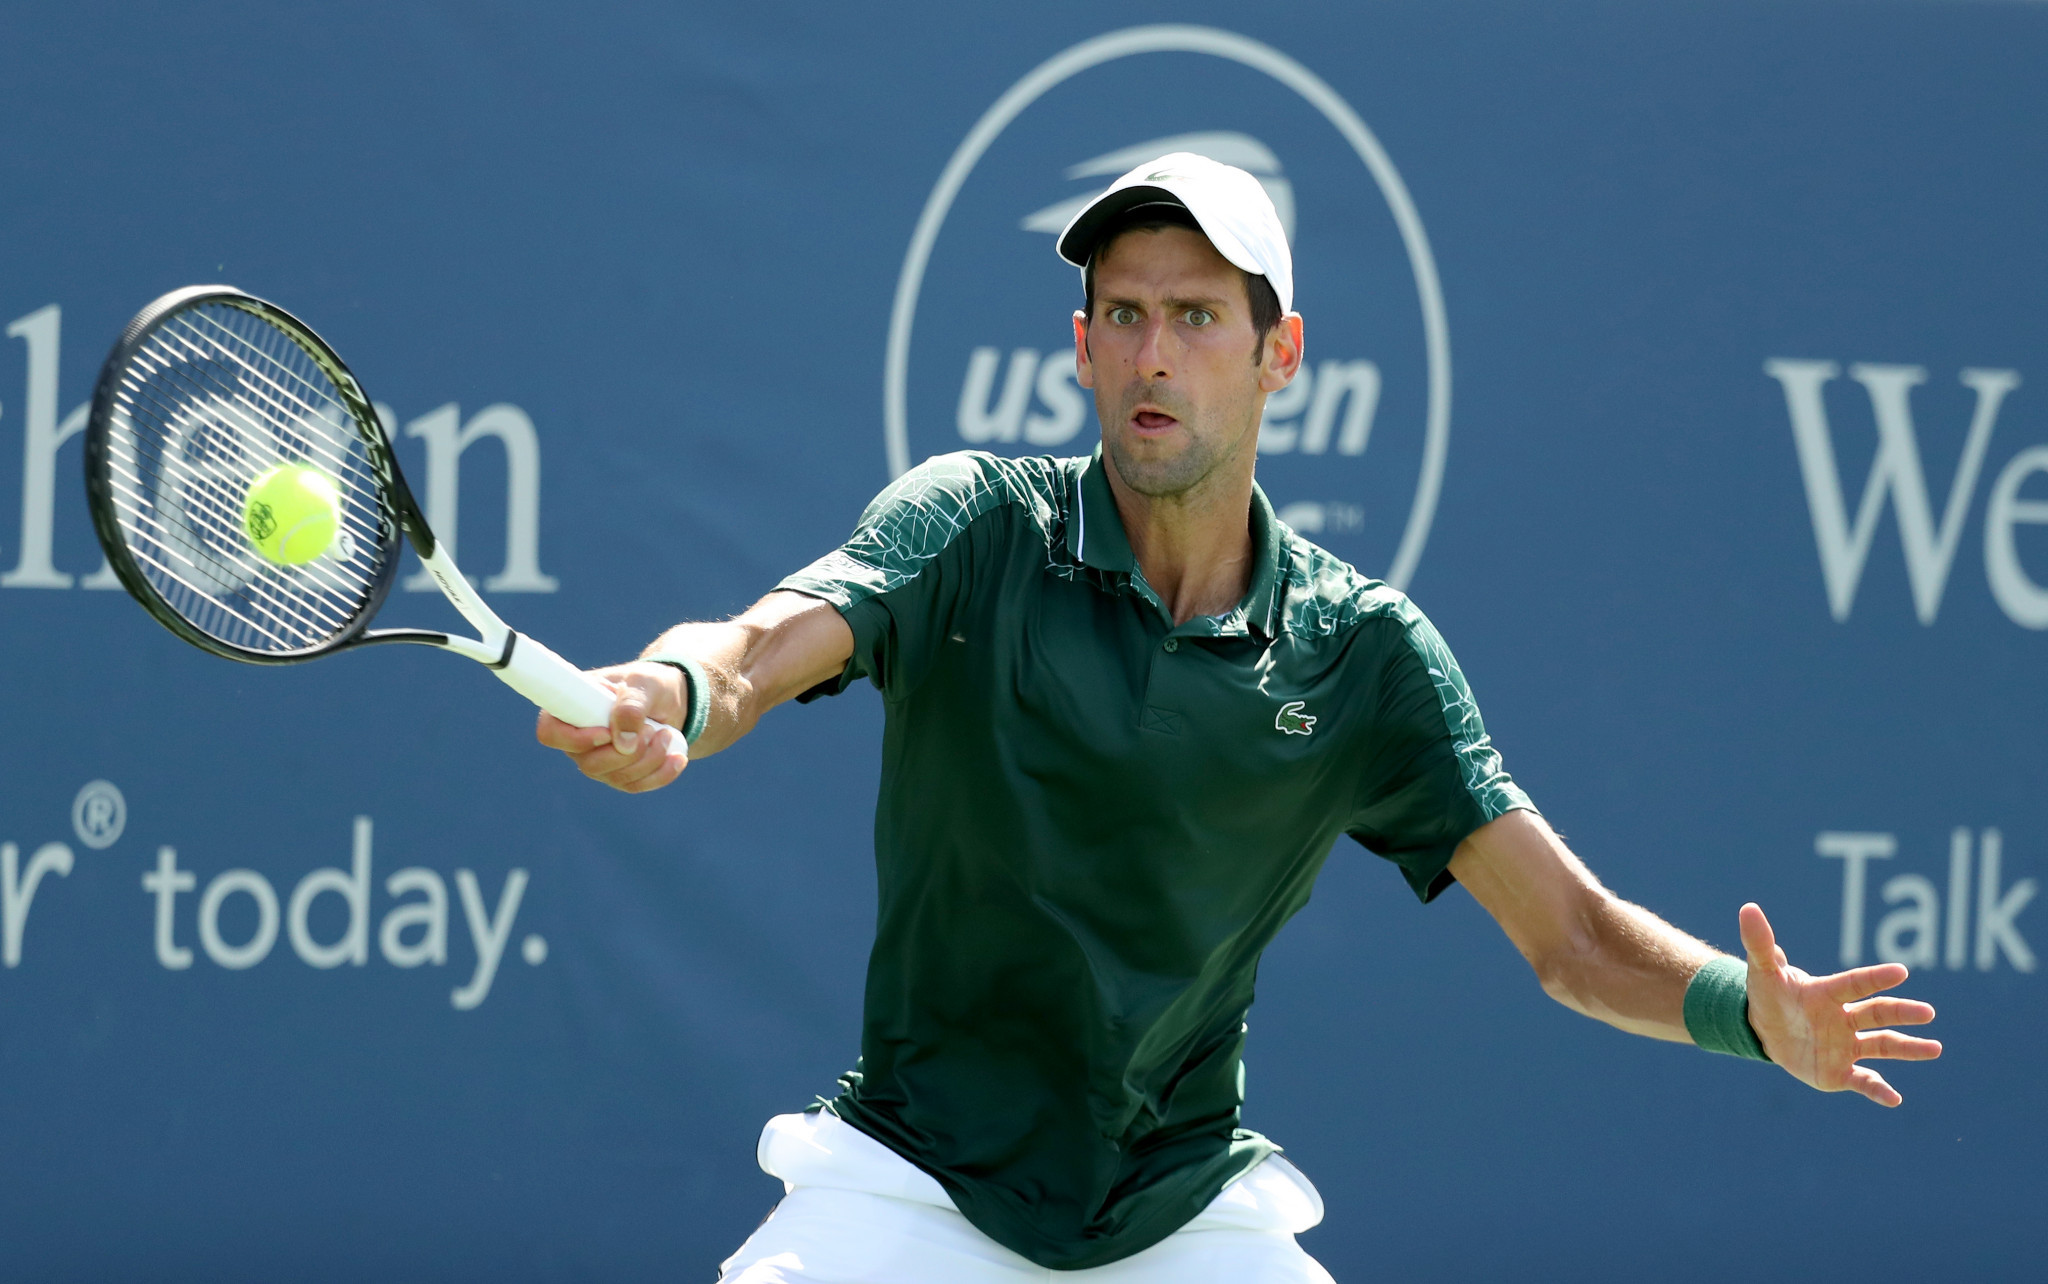 Djokovic closes in on elusive Masters 1000 title by reaching Cincinnati final